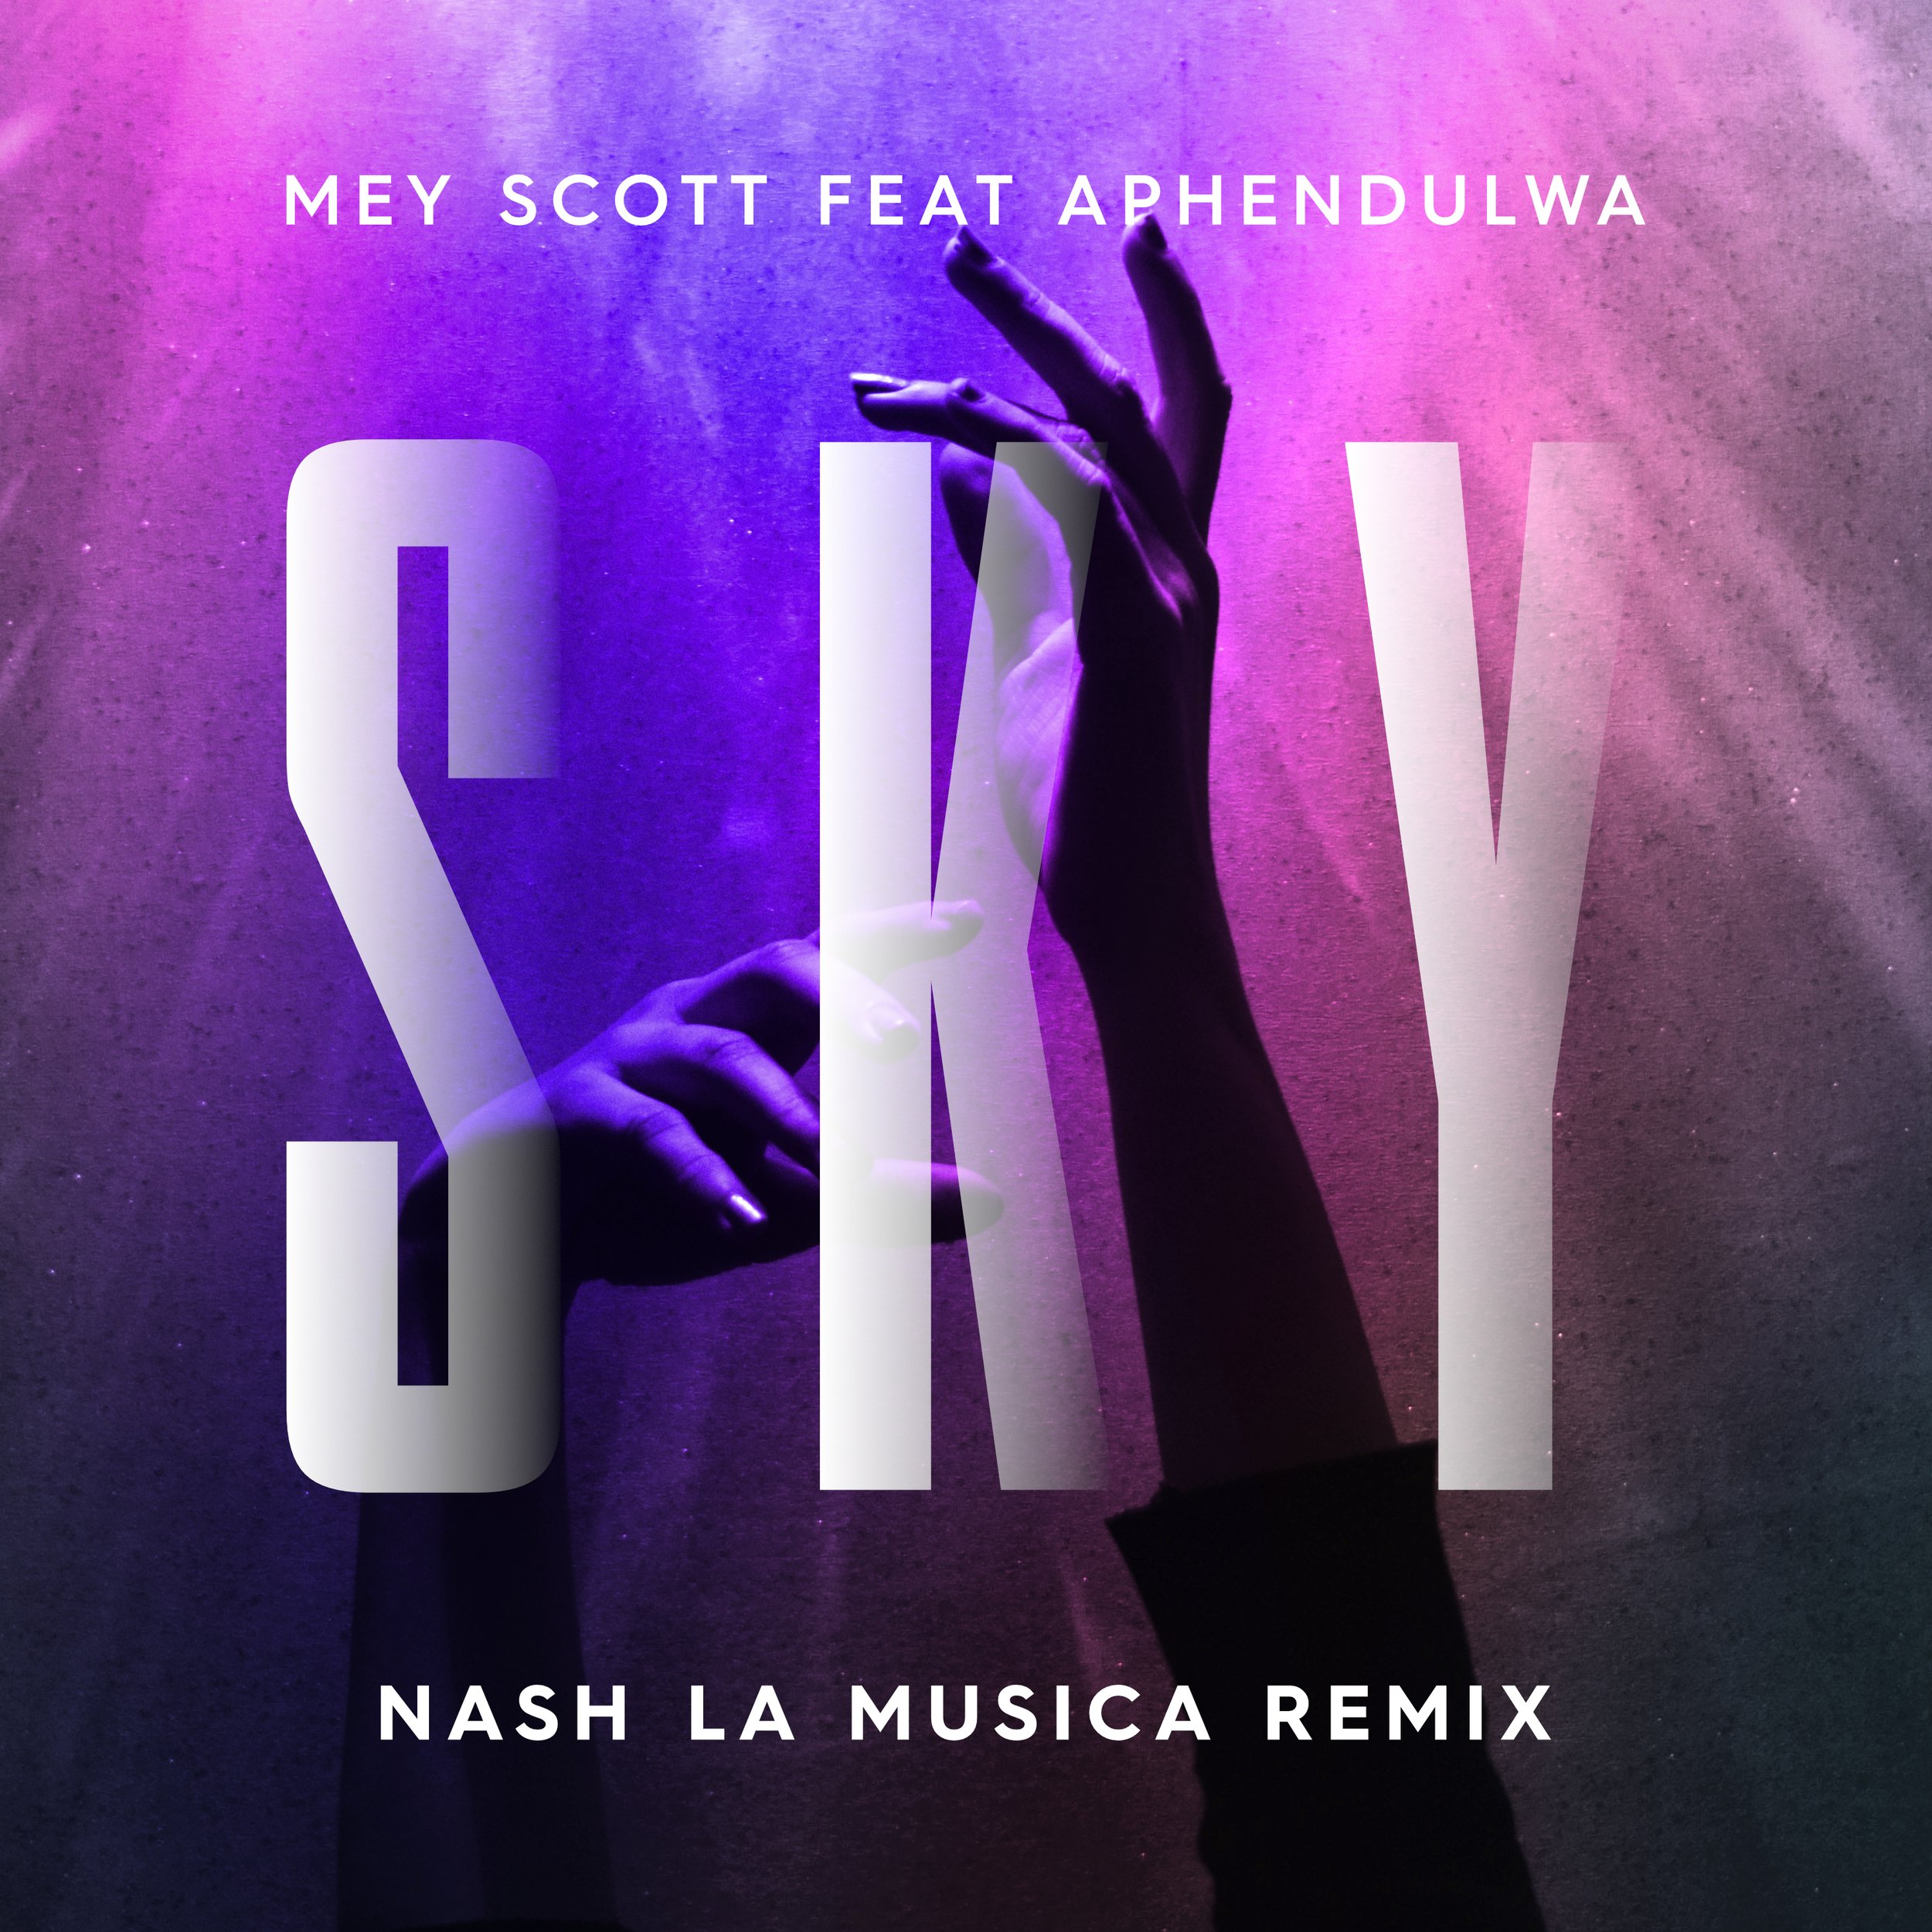 Mey Scott ft. Aphendulwa - Sky (Nash La Musica Remix) - Artwork.jpg